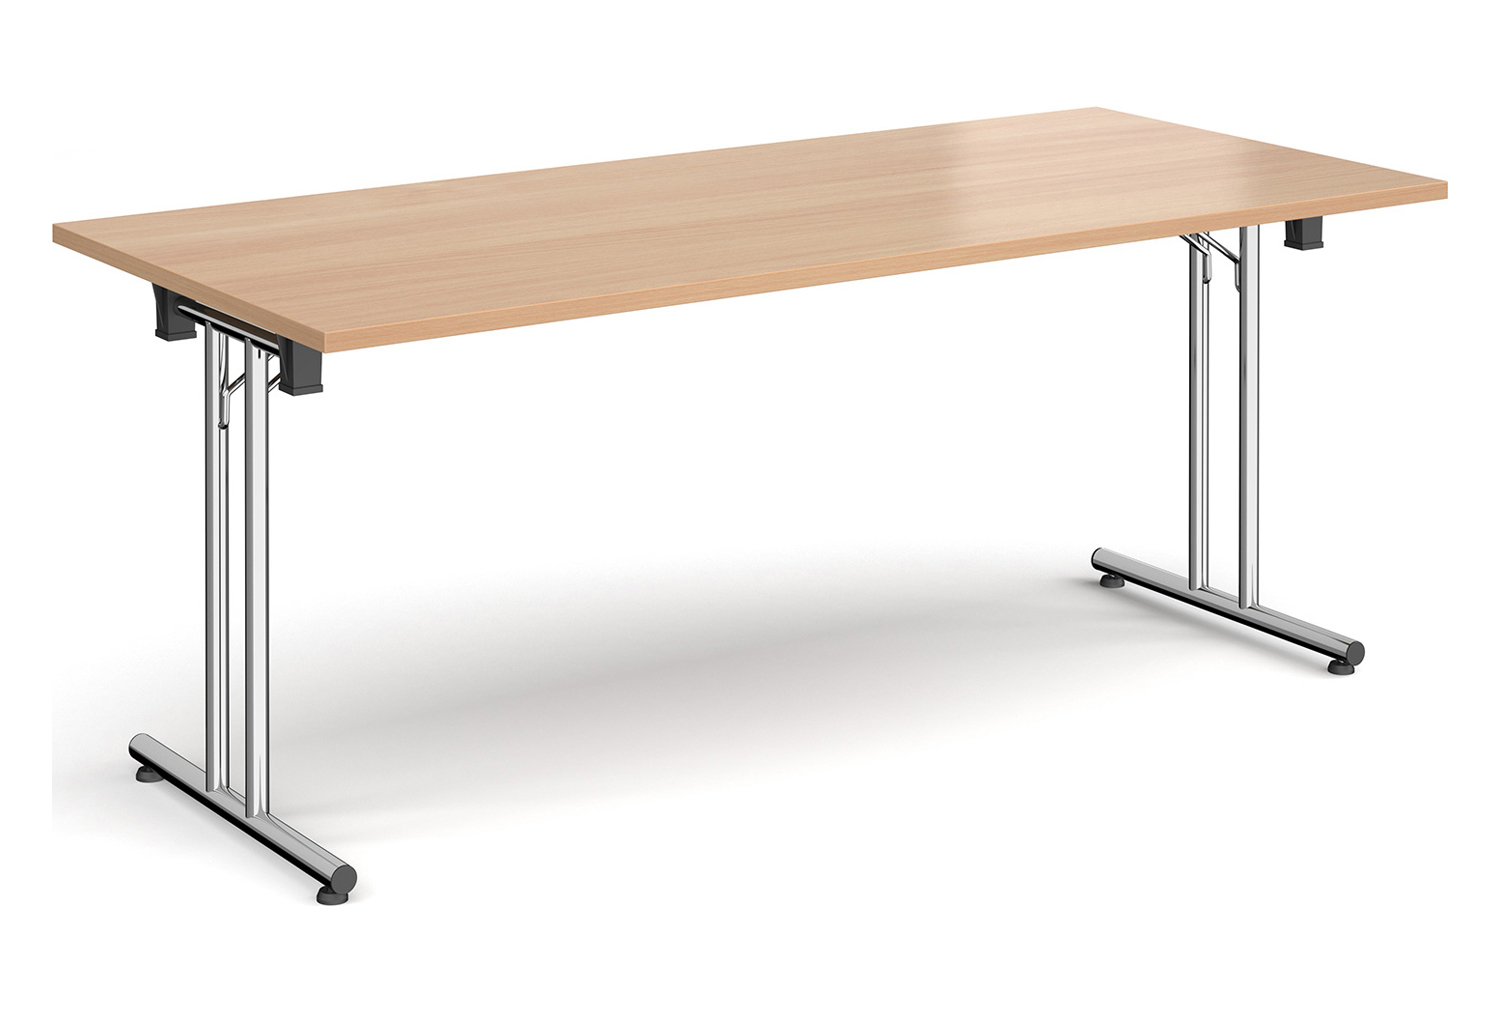 Durand Rectangular Folding Table, 180wx80dx73h (cm), Chrome Frame, Beech